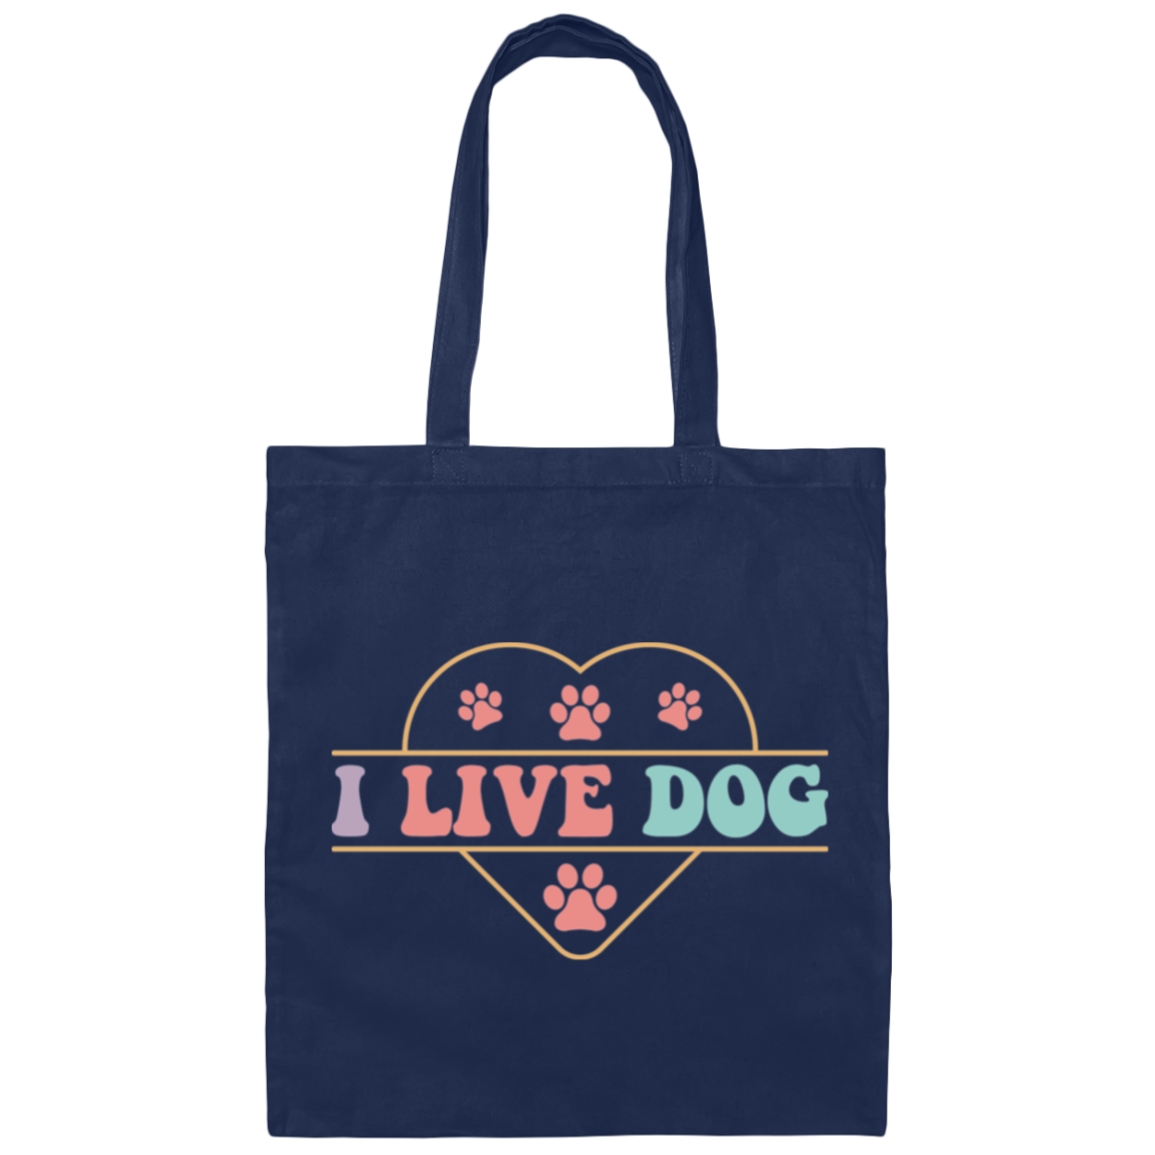 I Live Dog Paw Print Canvas Tote Bag